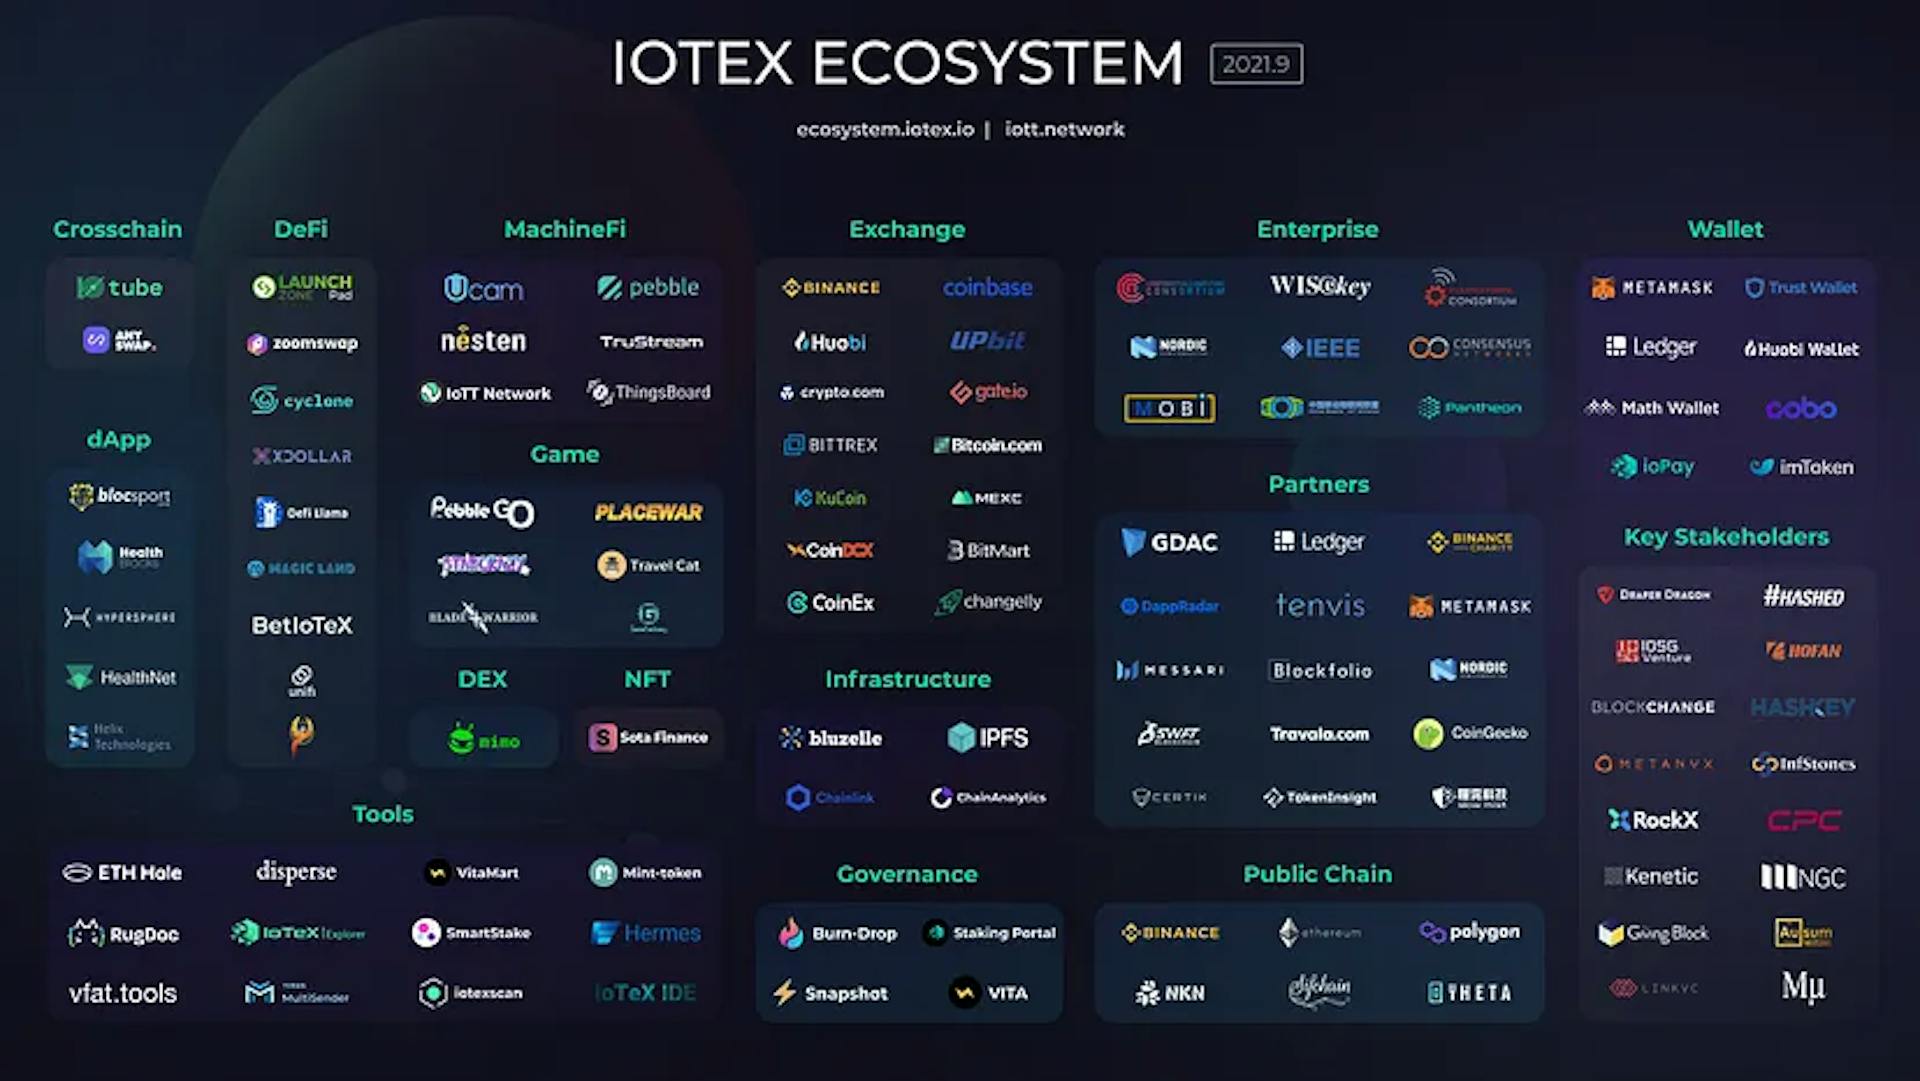 IoTeX Ecosystem in 2021.